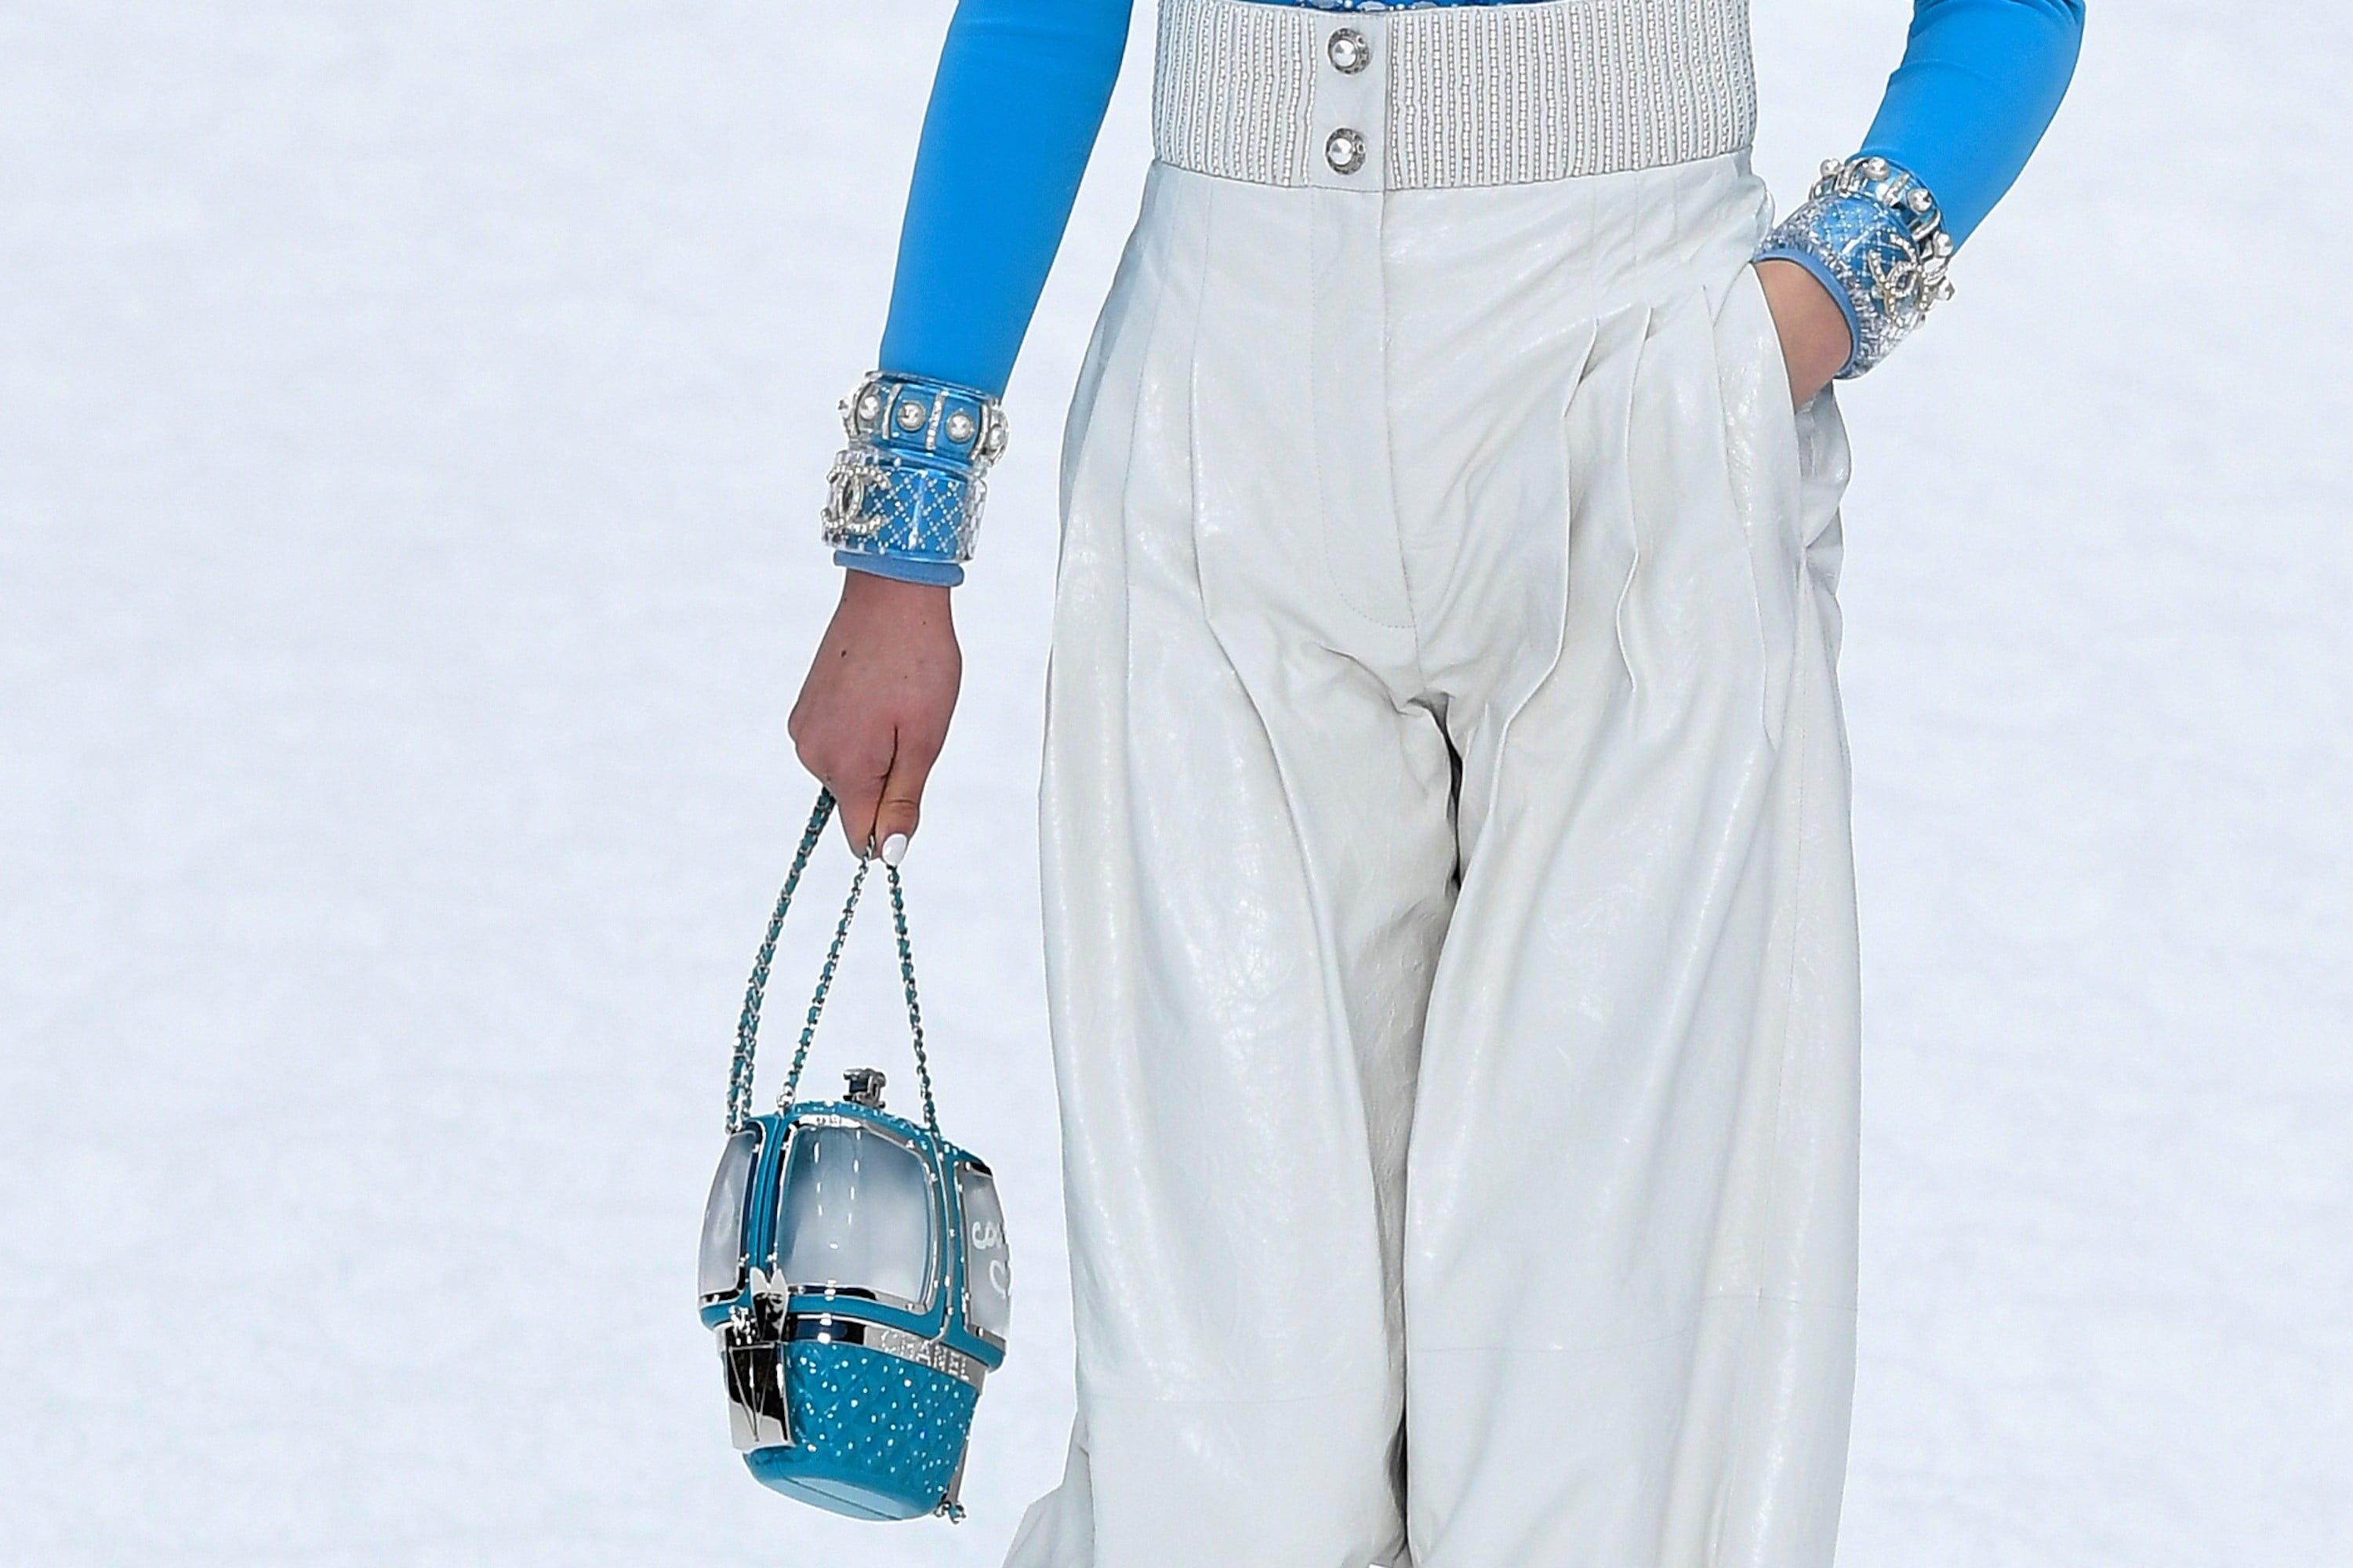 Chanel Bags And Shoes Fall 2019 | Popsugar Fashion